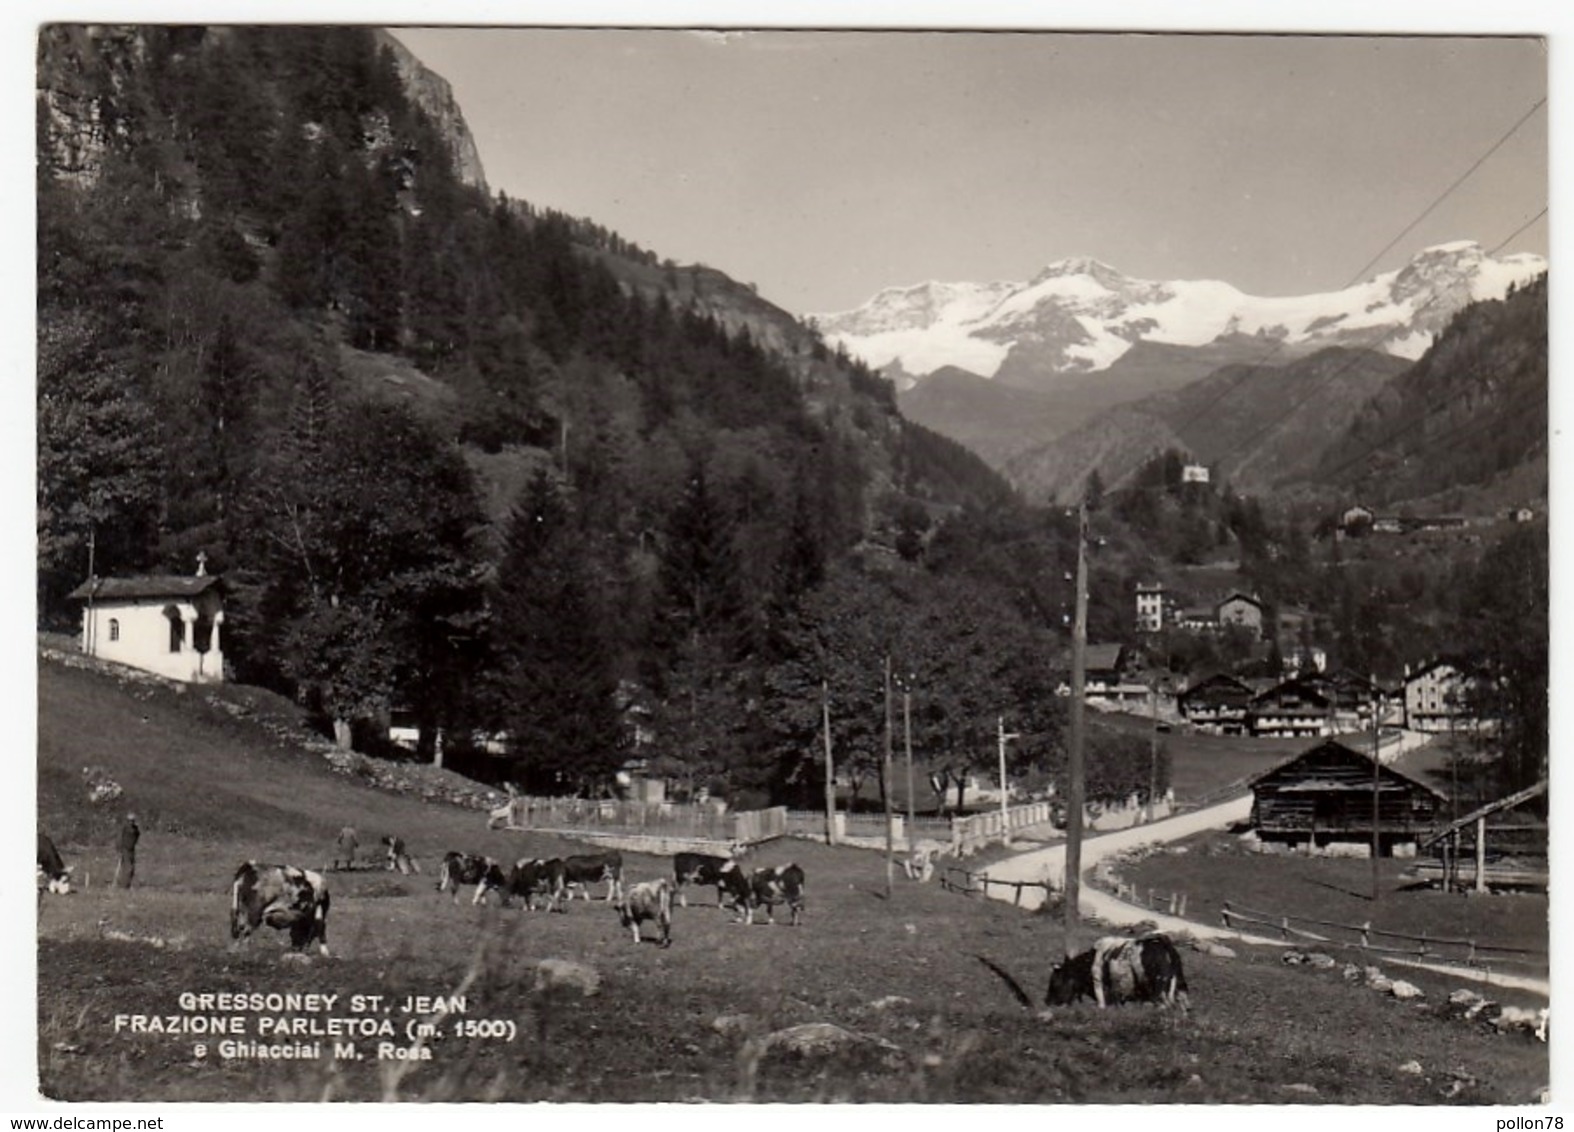 GRESSONEY ST. JEAN - FRAZIONE PARLETOA E GHIACCIAI M. ROSA - AOSTA - 1953 - Aosta